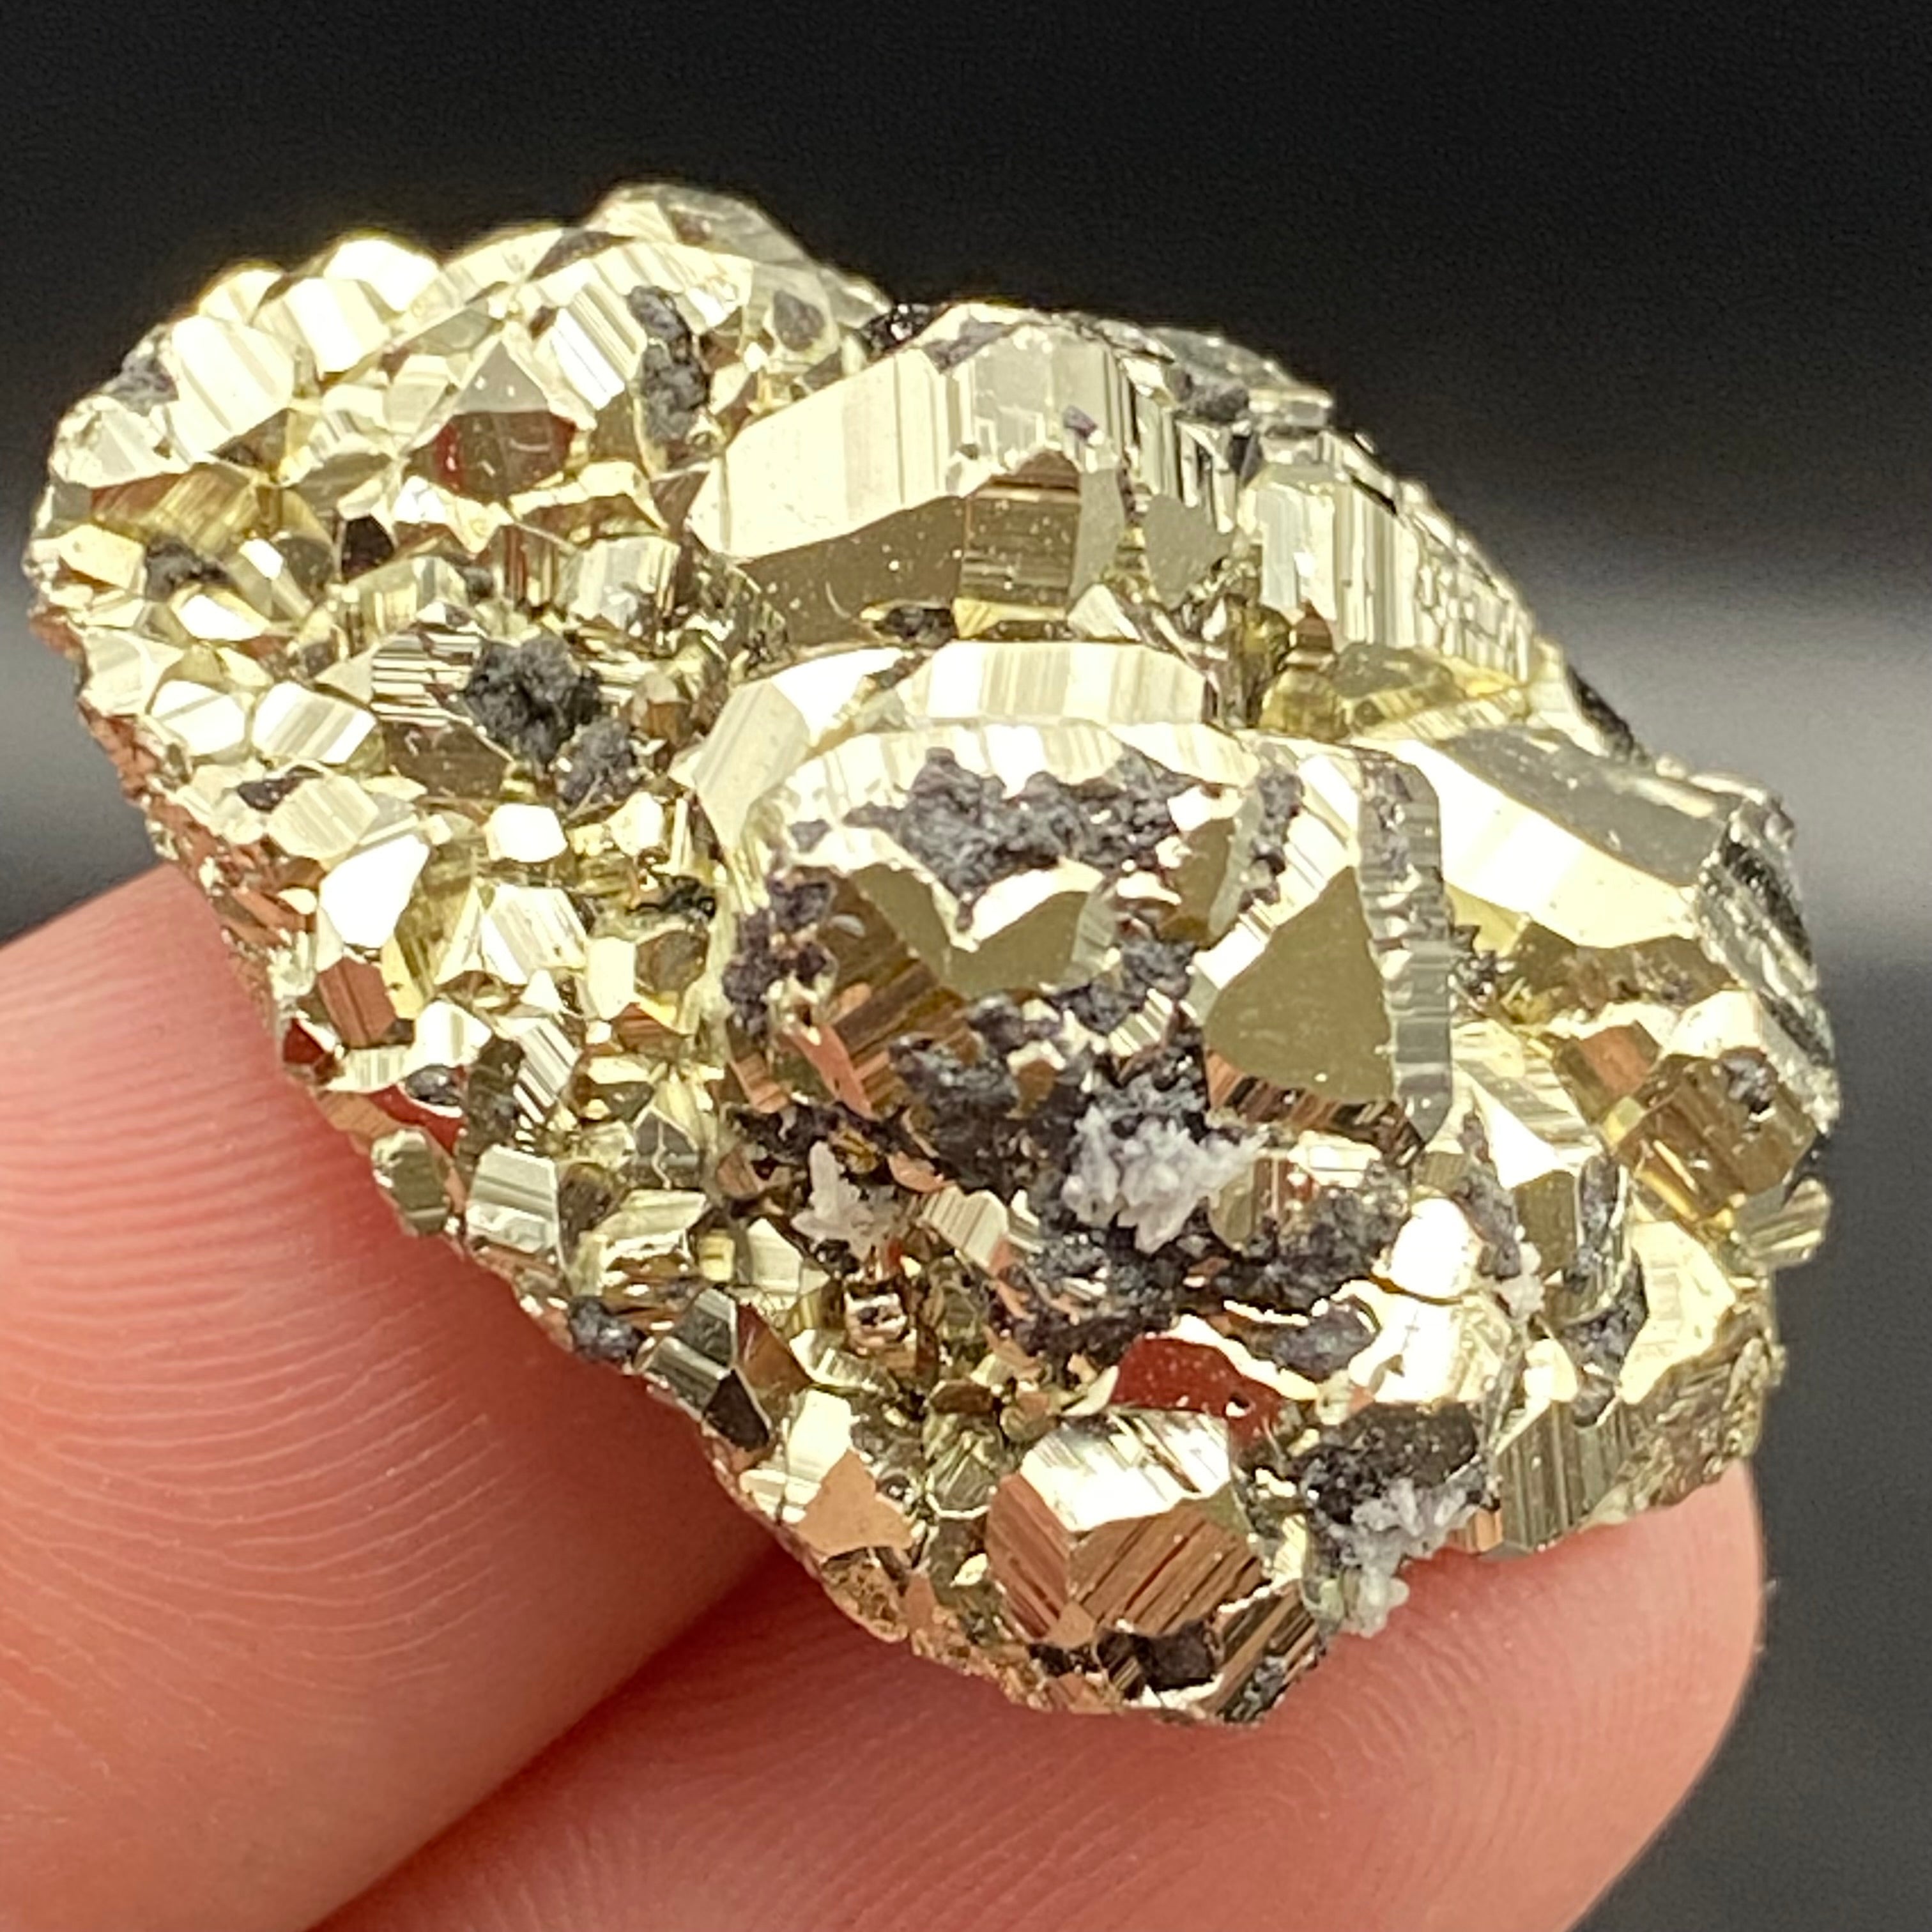 Peruvian Pyrite Crystal - 075